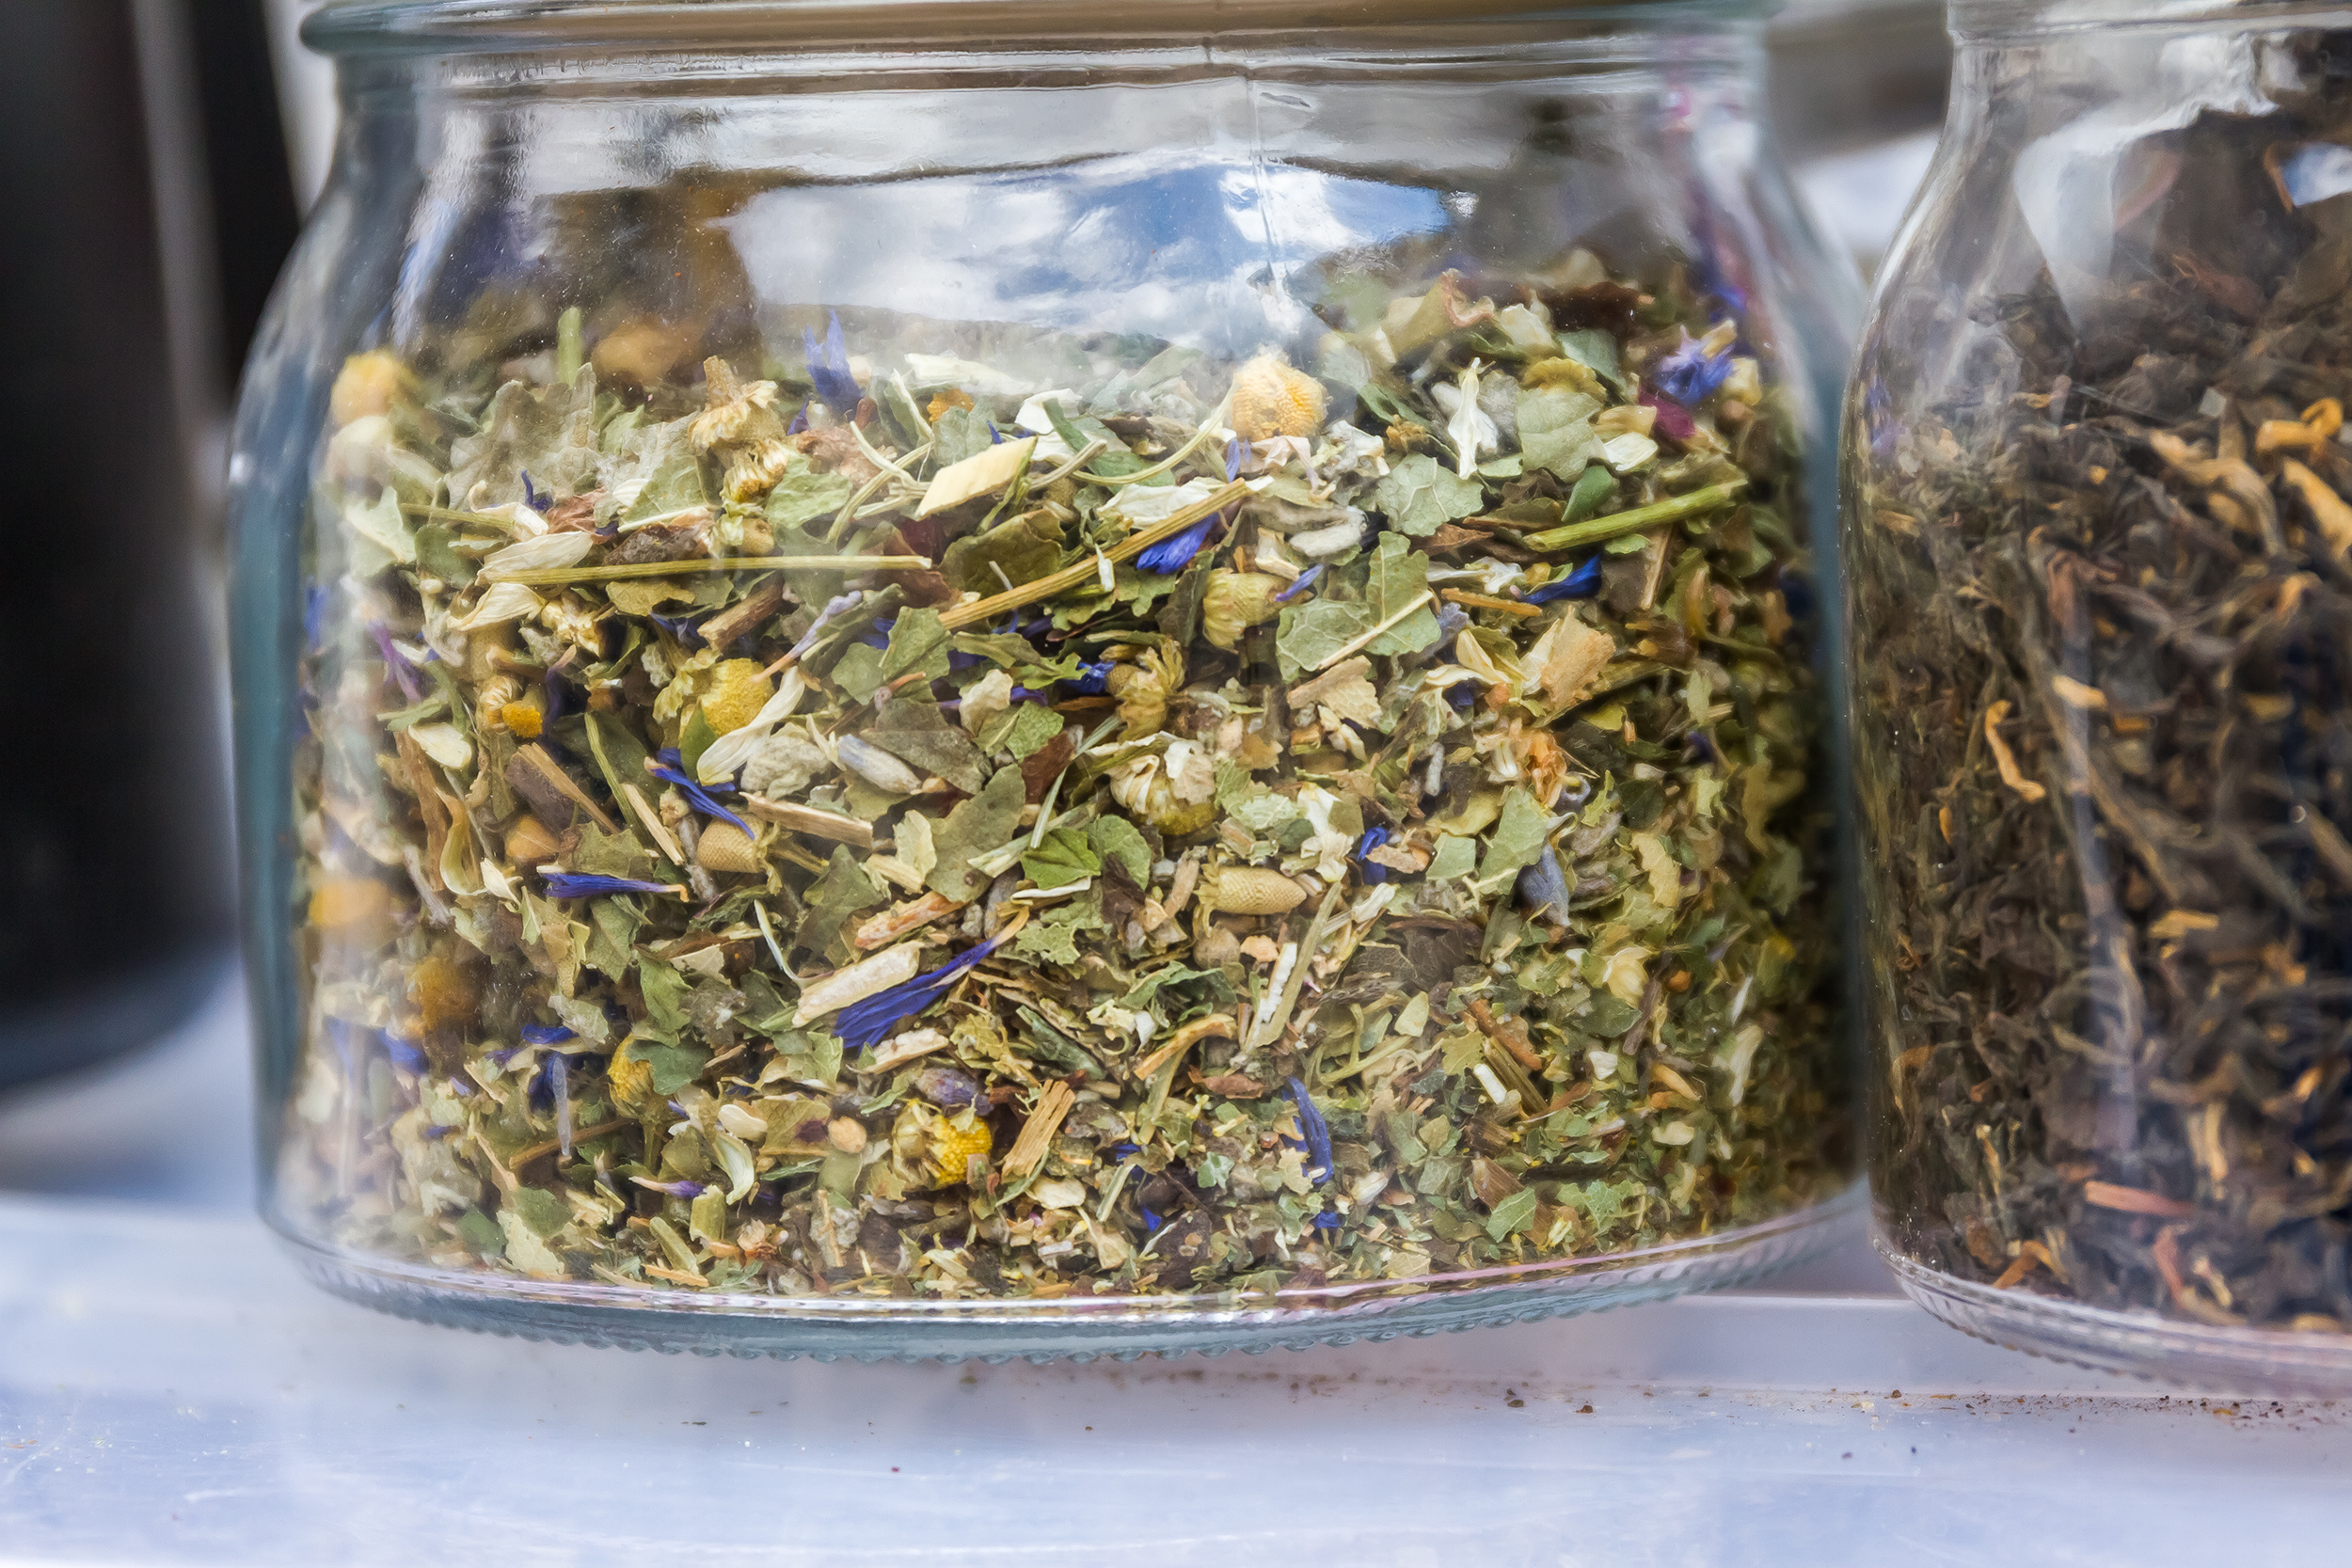 sun tea - herbal sun tea - iced tea - tea - herbal tea - summer - summertime - beverage - recipe